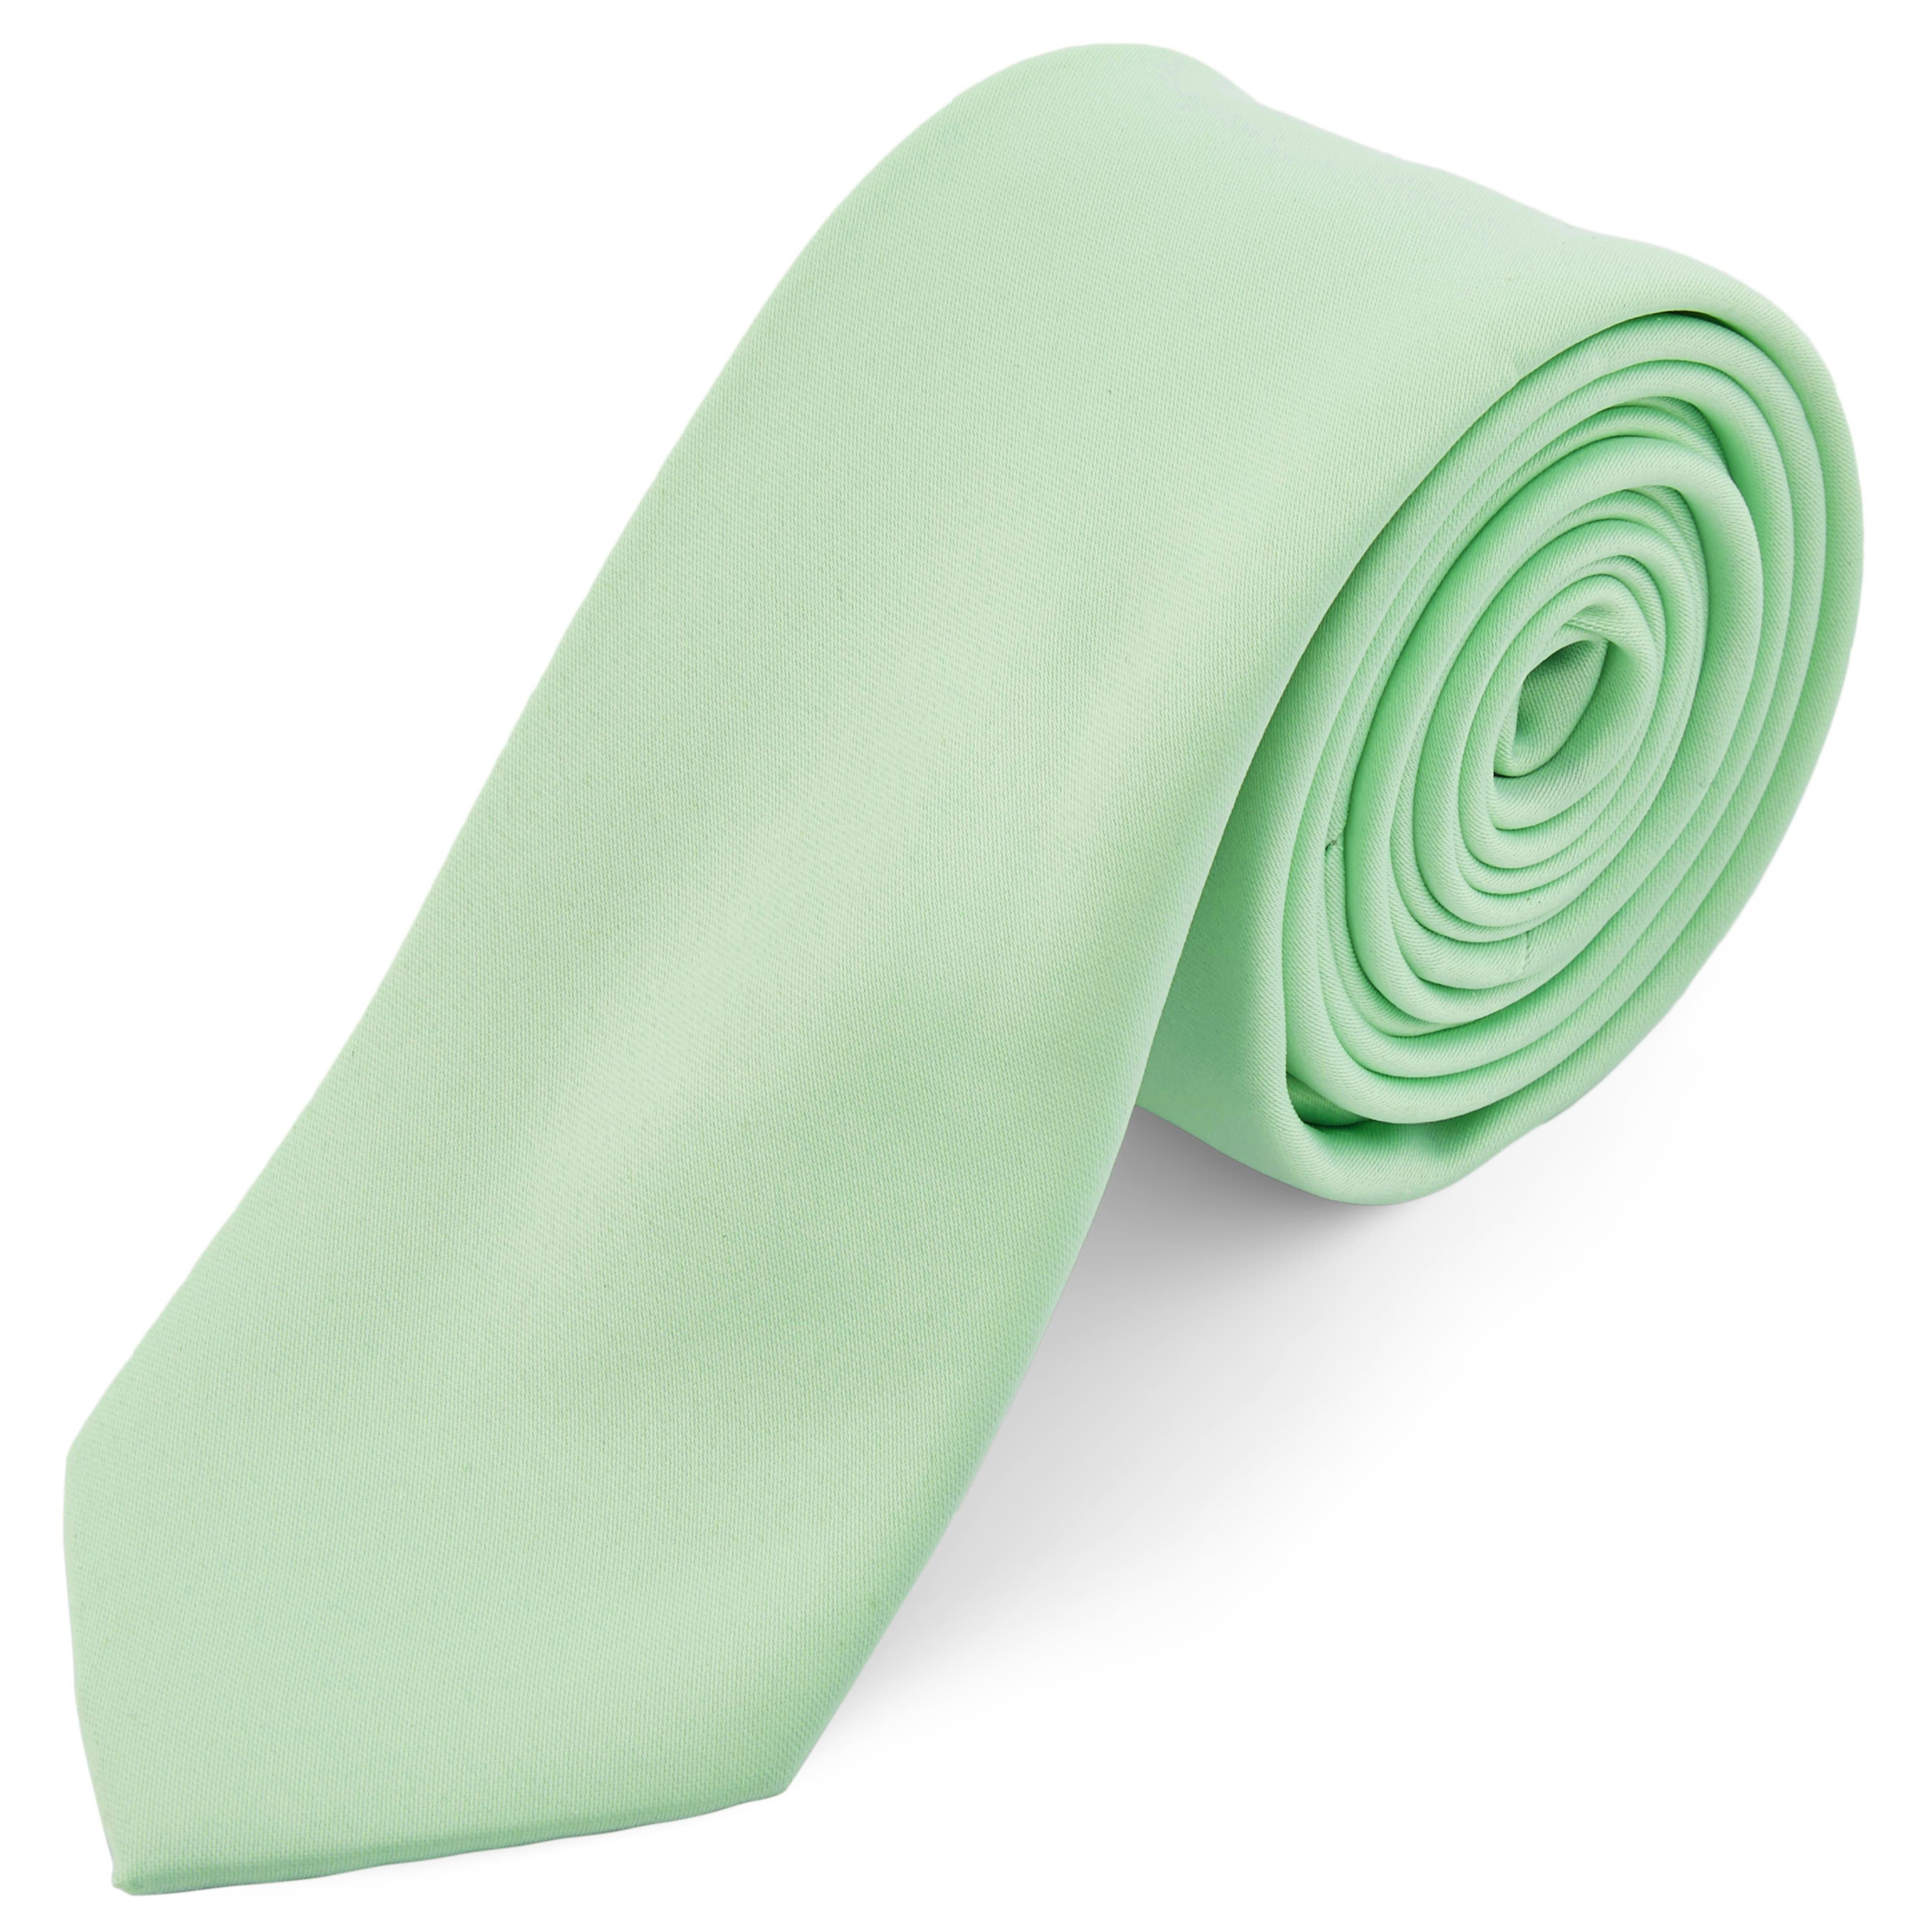 Cravate classique 6 cm vert menthe